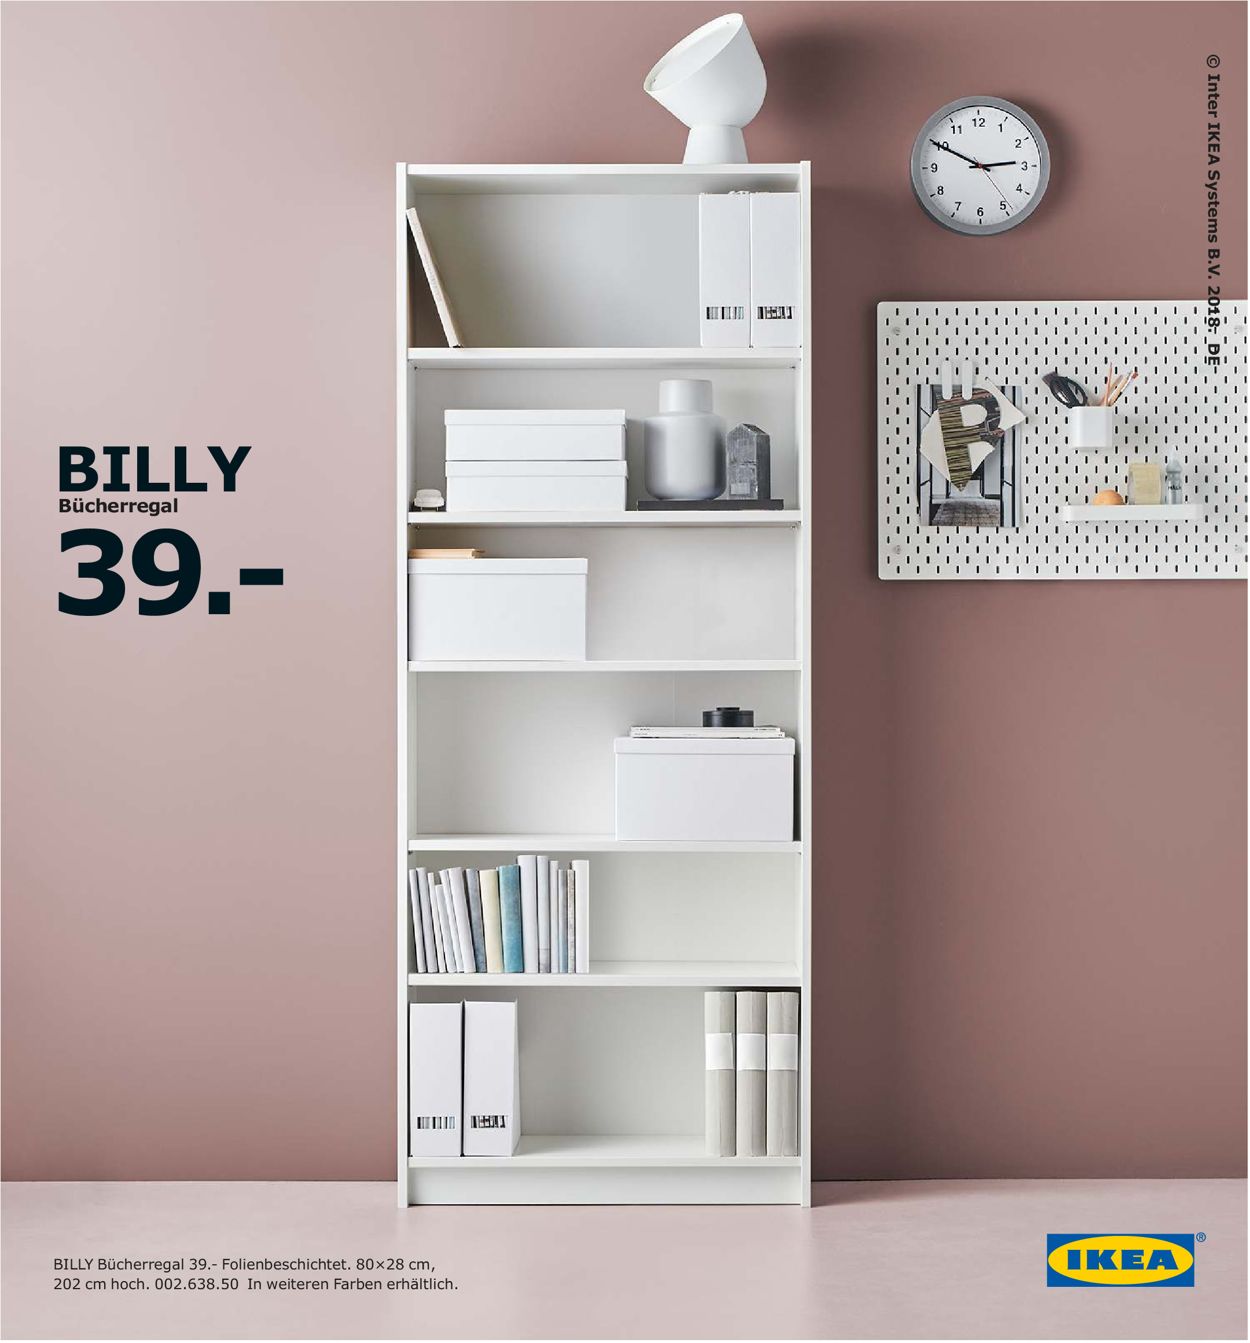 IKEA Prospekt ab 01.02.2019